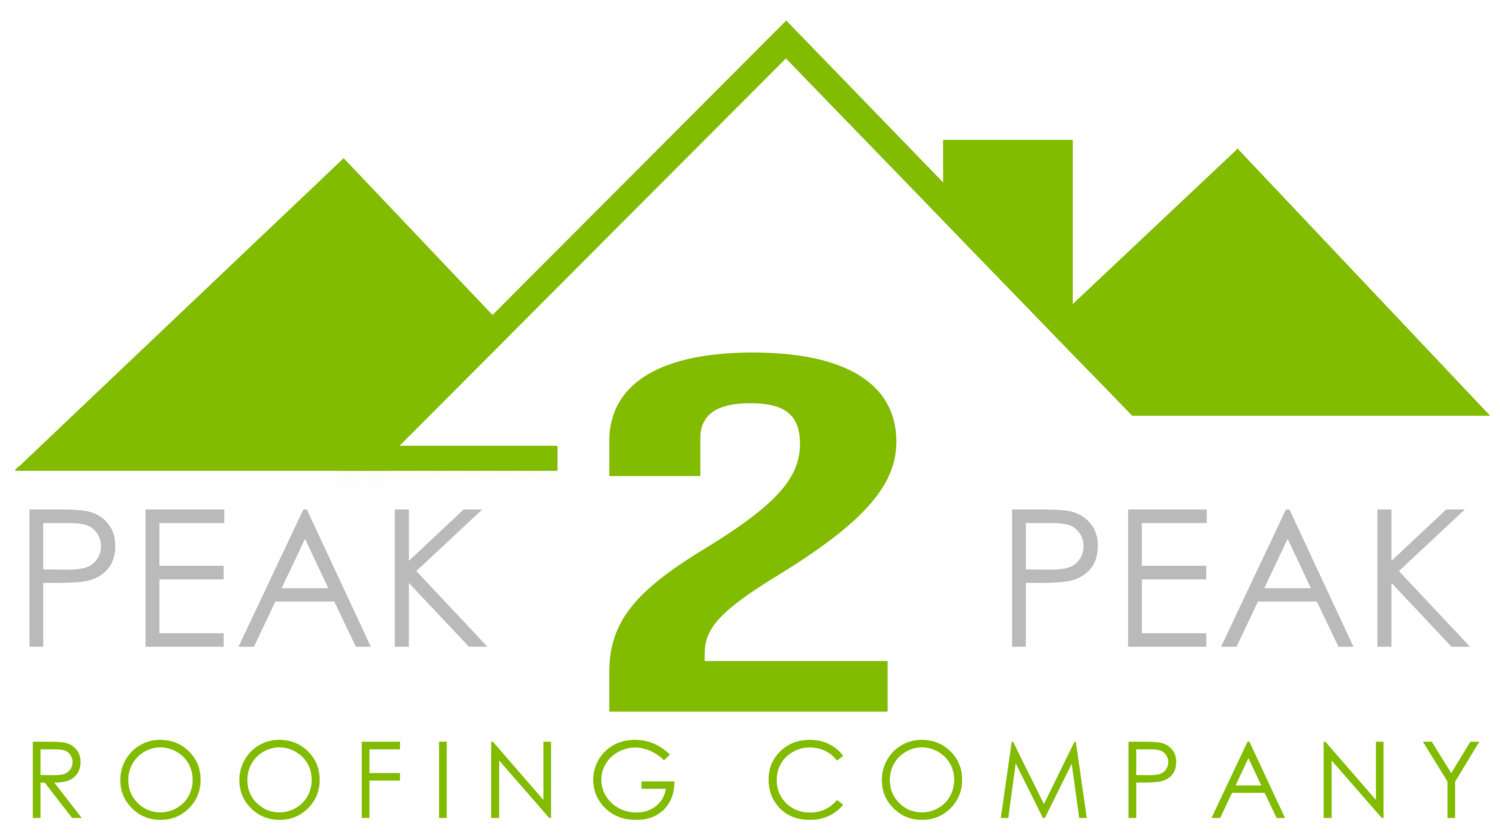 Peak 2 Peak Roofing Company Logo